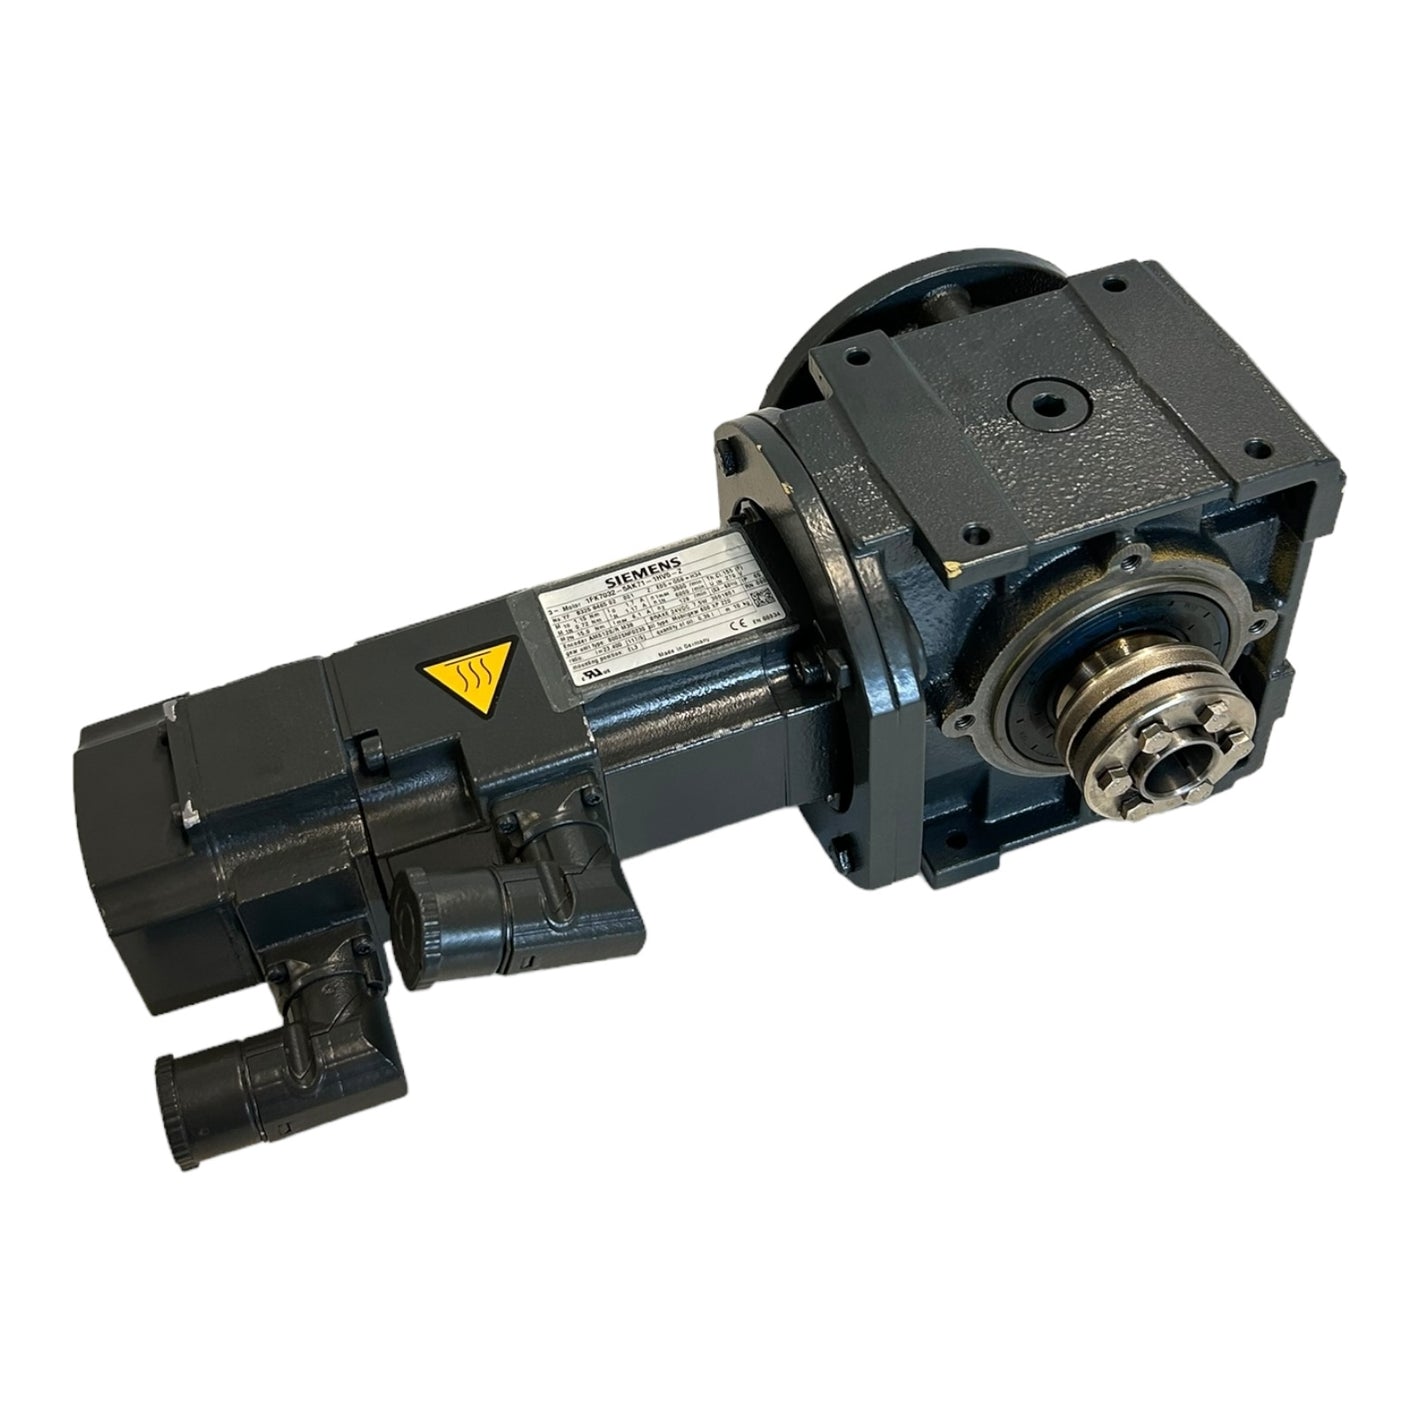 Siemens 1FK7032-5AK71-1HV5-Z servo motor with gearbox for industrial use